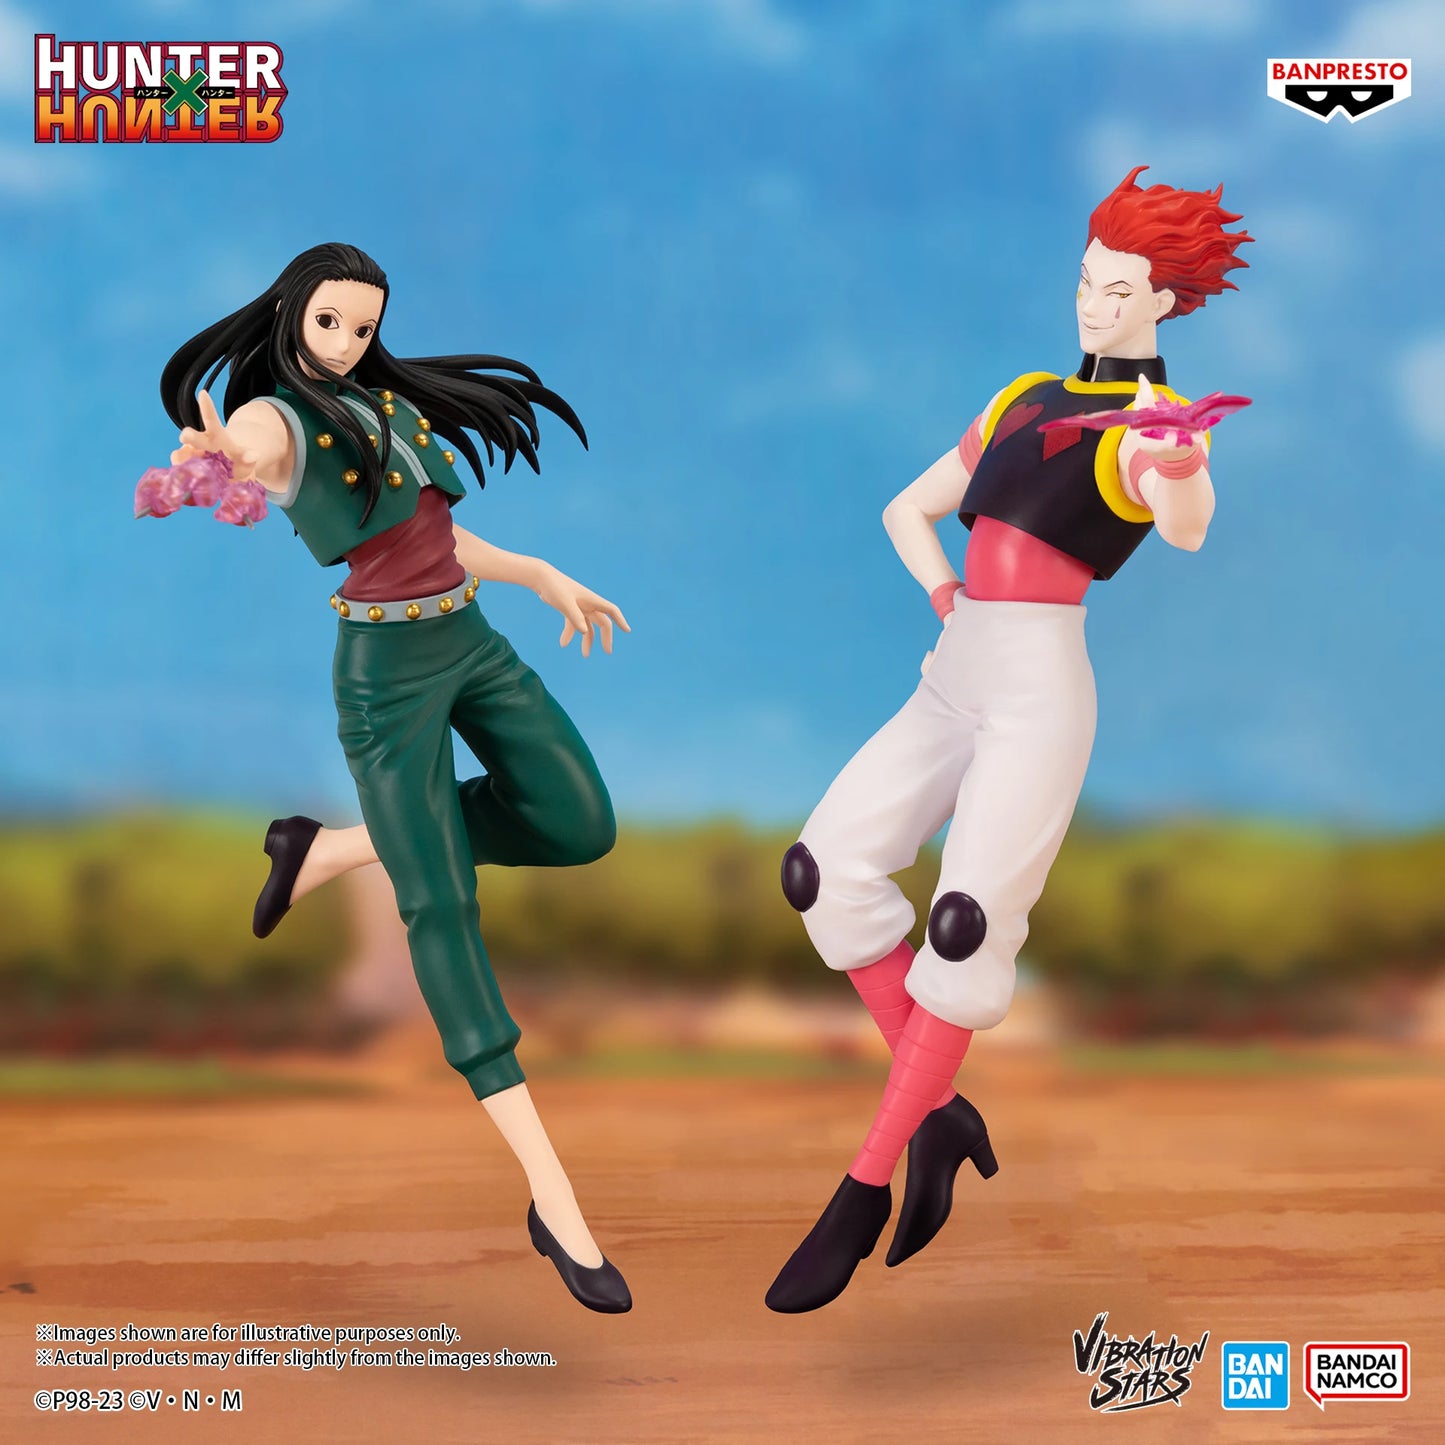 Hunter x Hunter - Illumi Action Figure Bandai Banpresto Vibration Stars